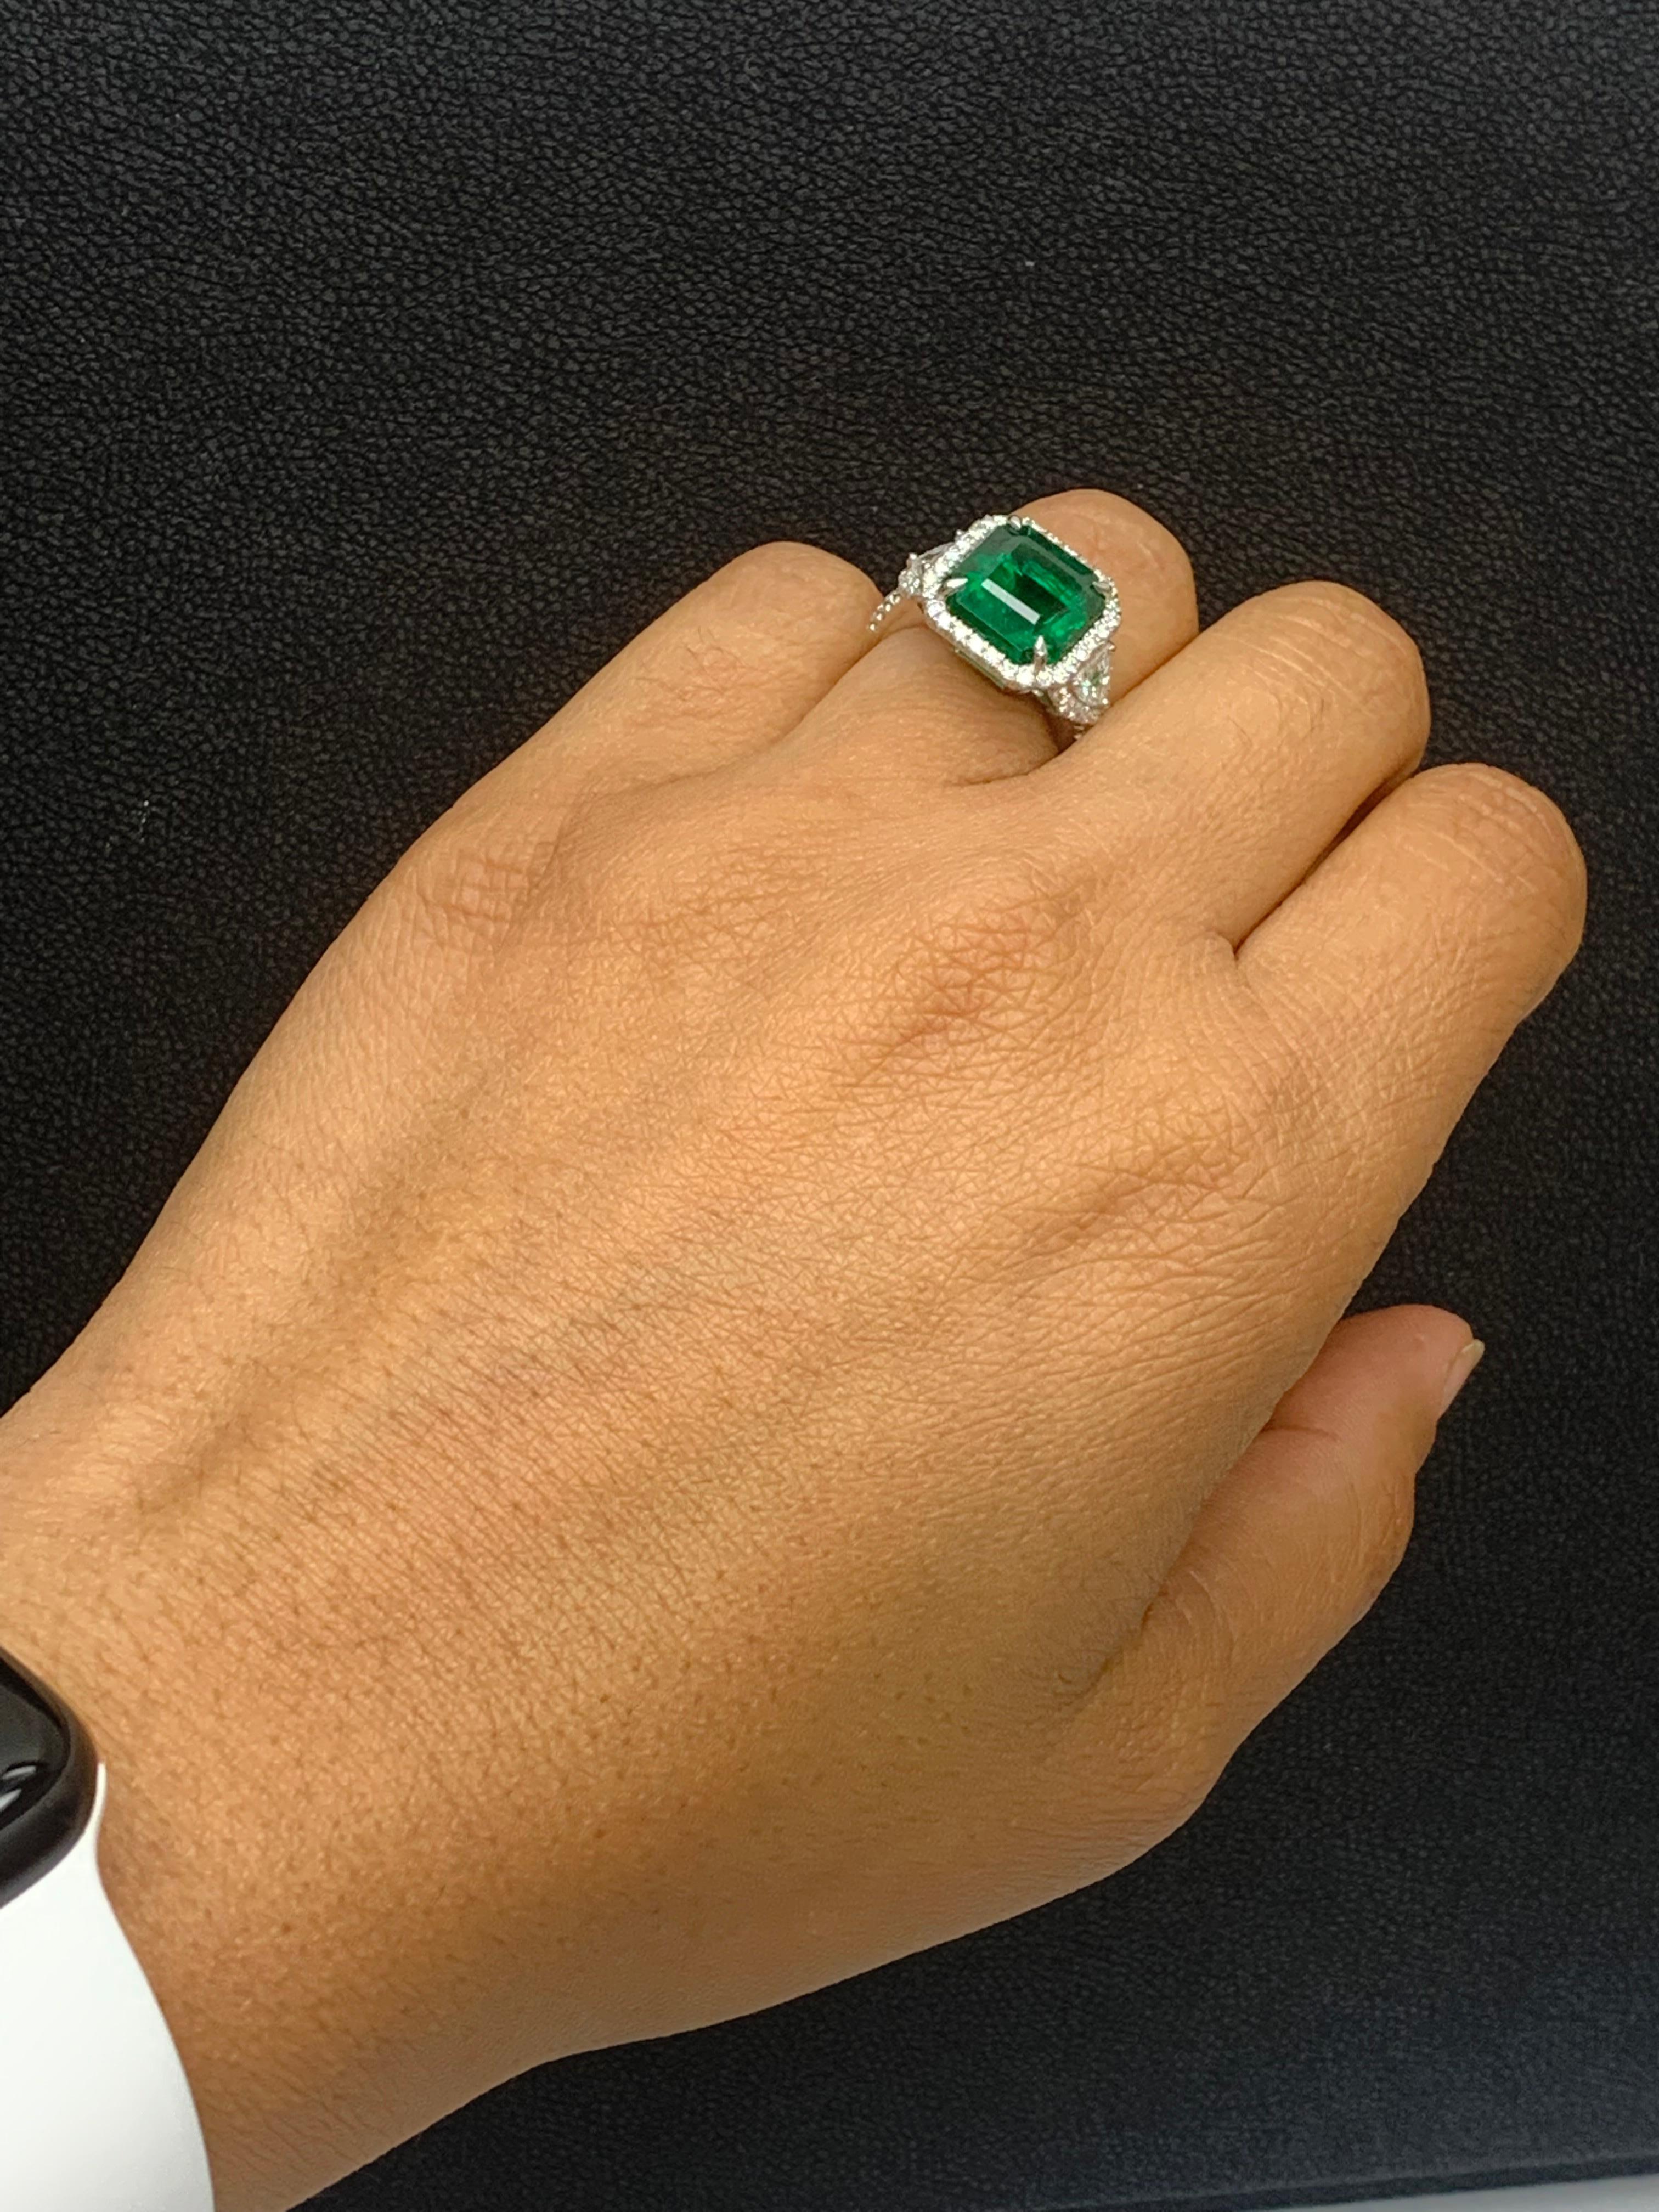 Certified 5.23 Carat Emerald Cut Emerald Diamond 3 Stone Halo Ring in Platinum For Sale 6